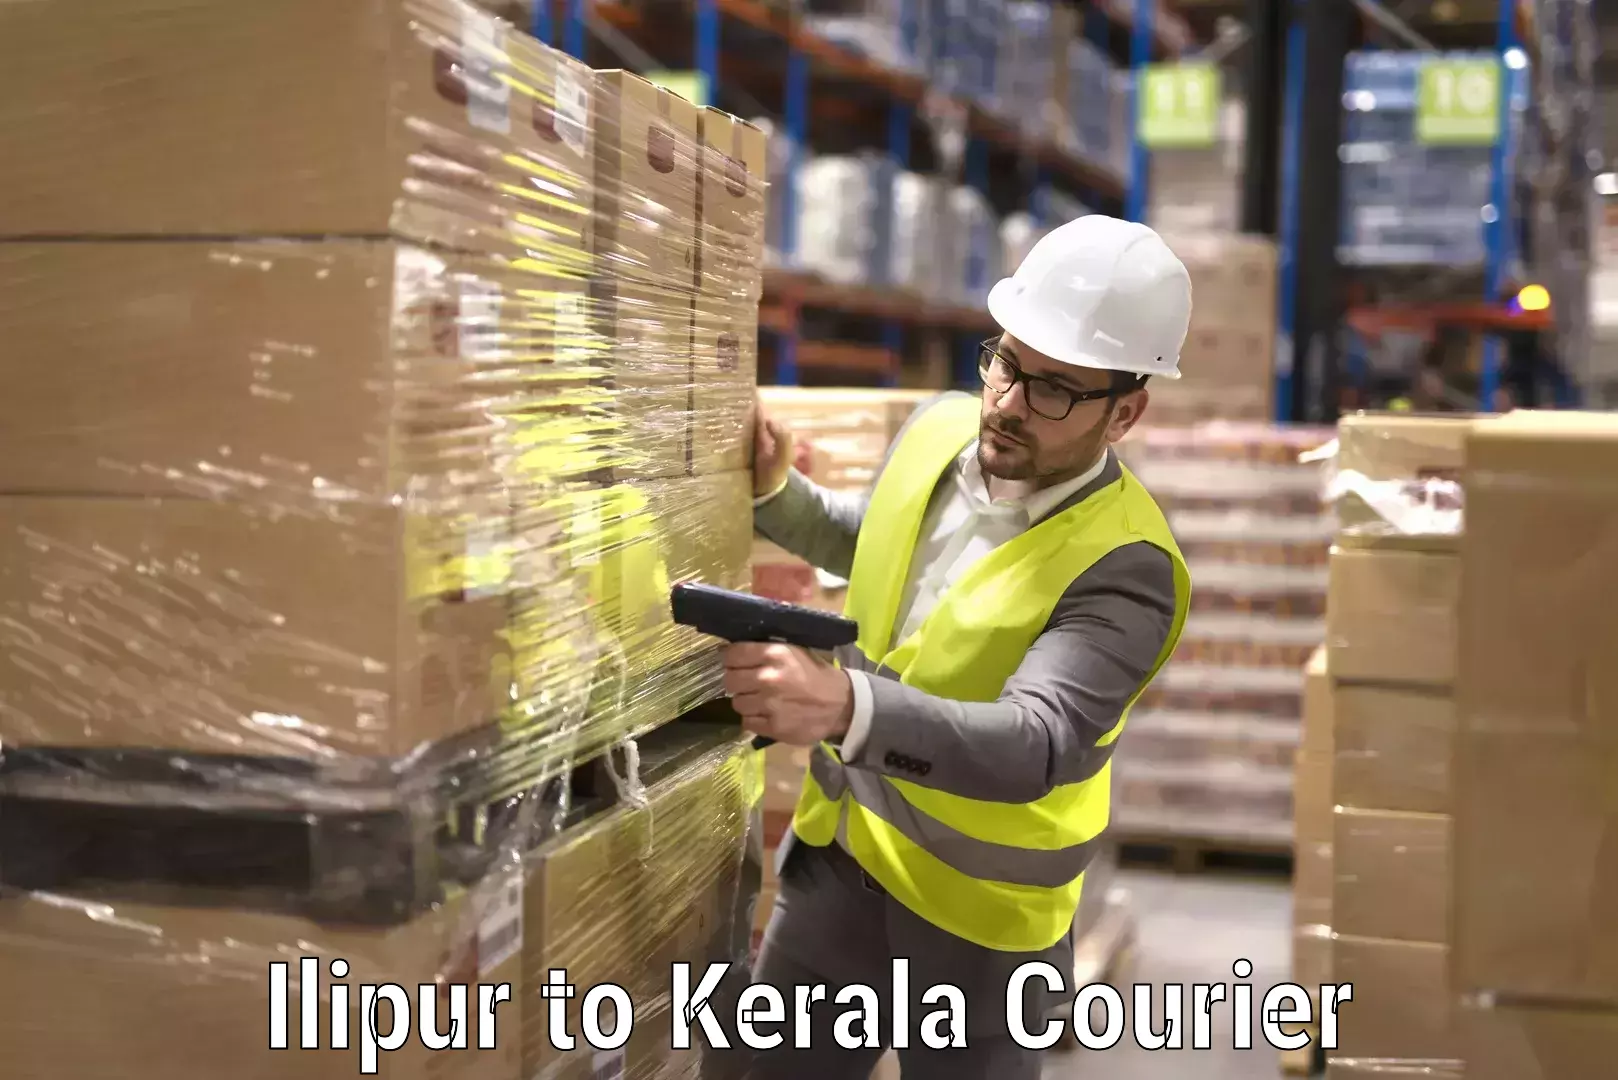 Furniture transport specialists Ilipur to Kerala